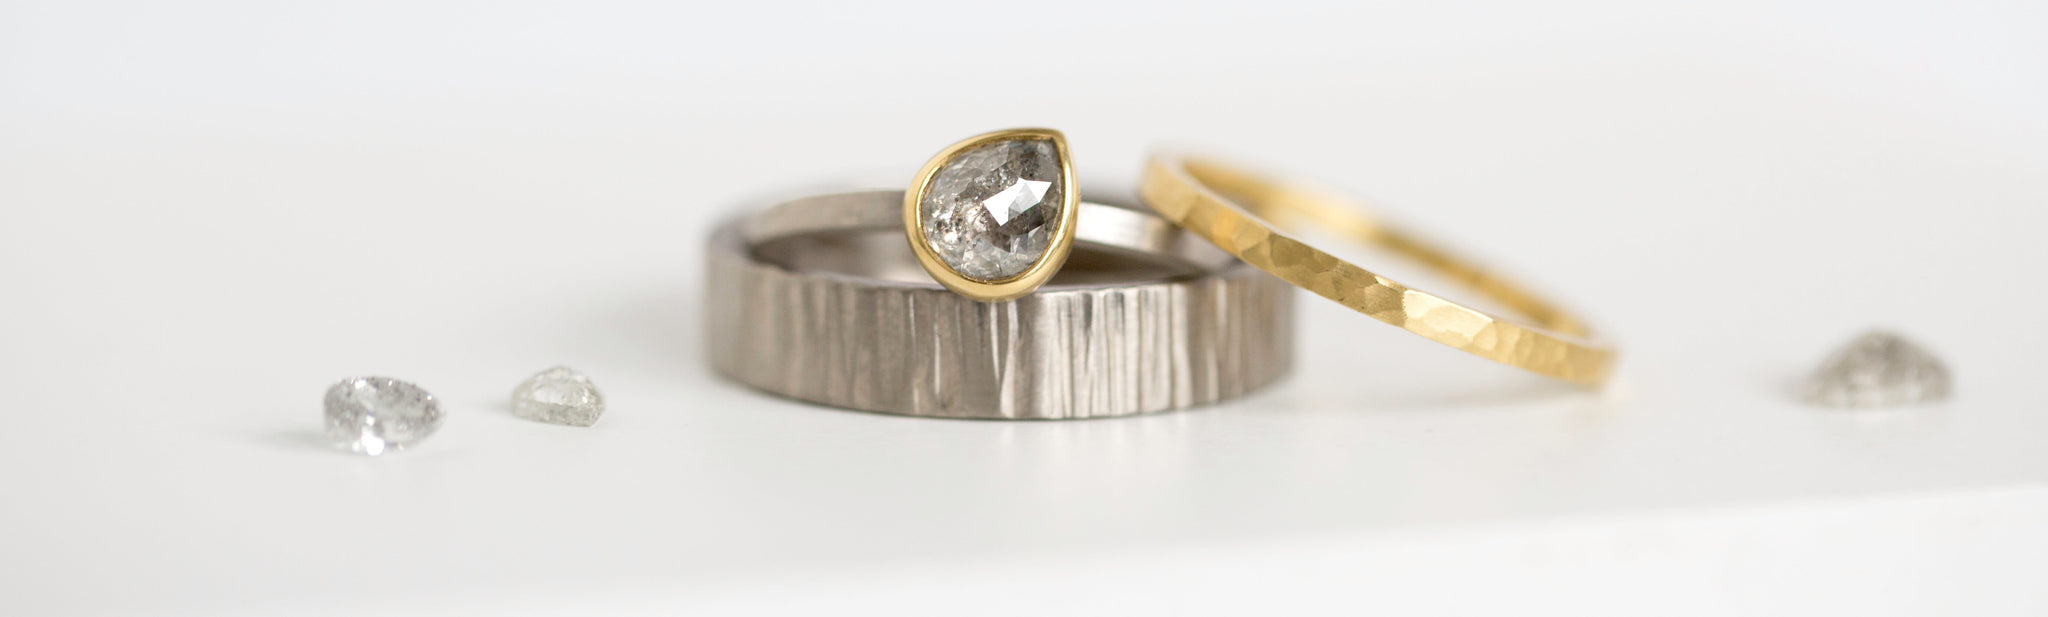 Wedding ring set by EC Design Jewelry in Minneapolis, MN.